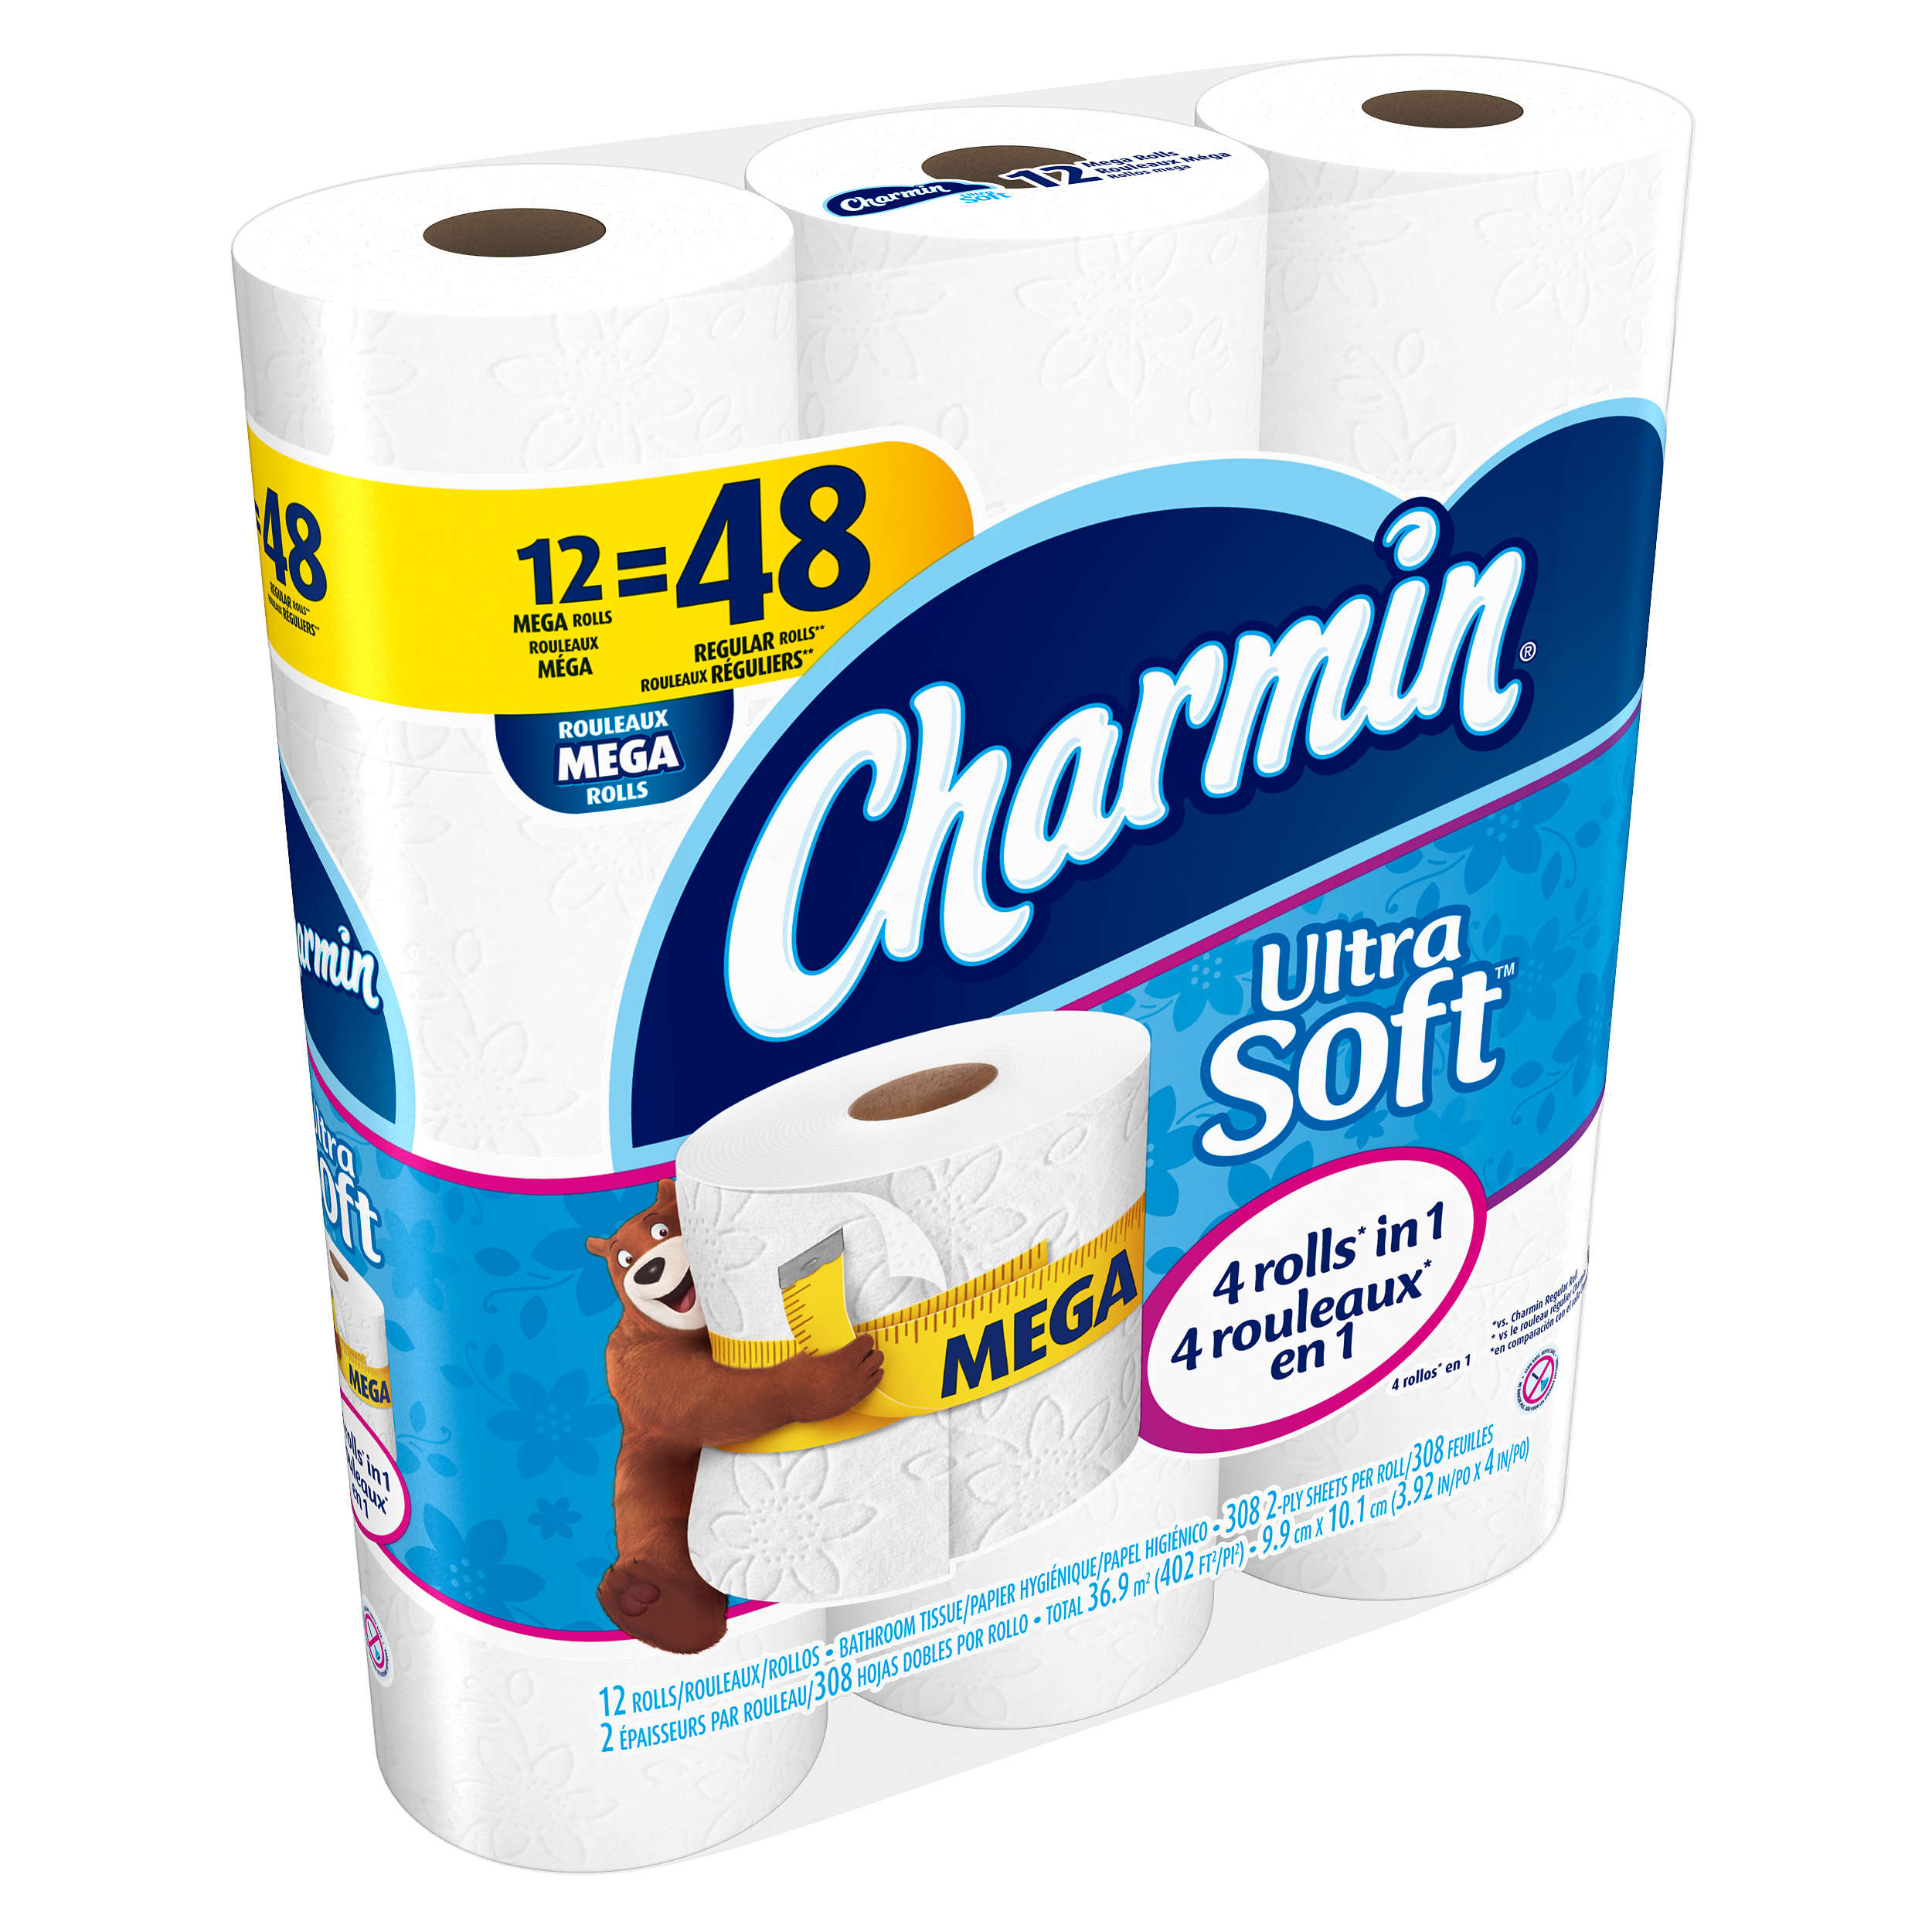 Charmin Ultra Soft Toilet Paper 12 Mega Rolls (Pack of 1) - image 4 of 6